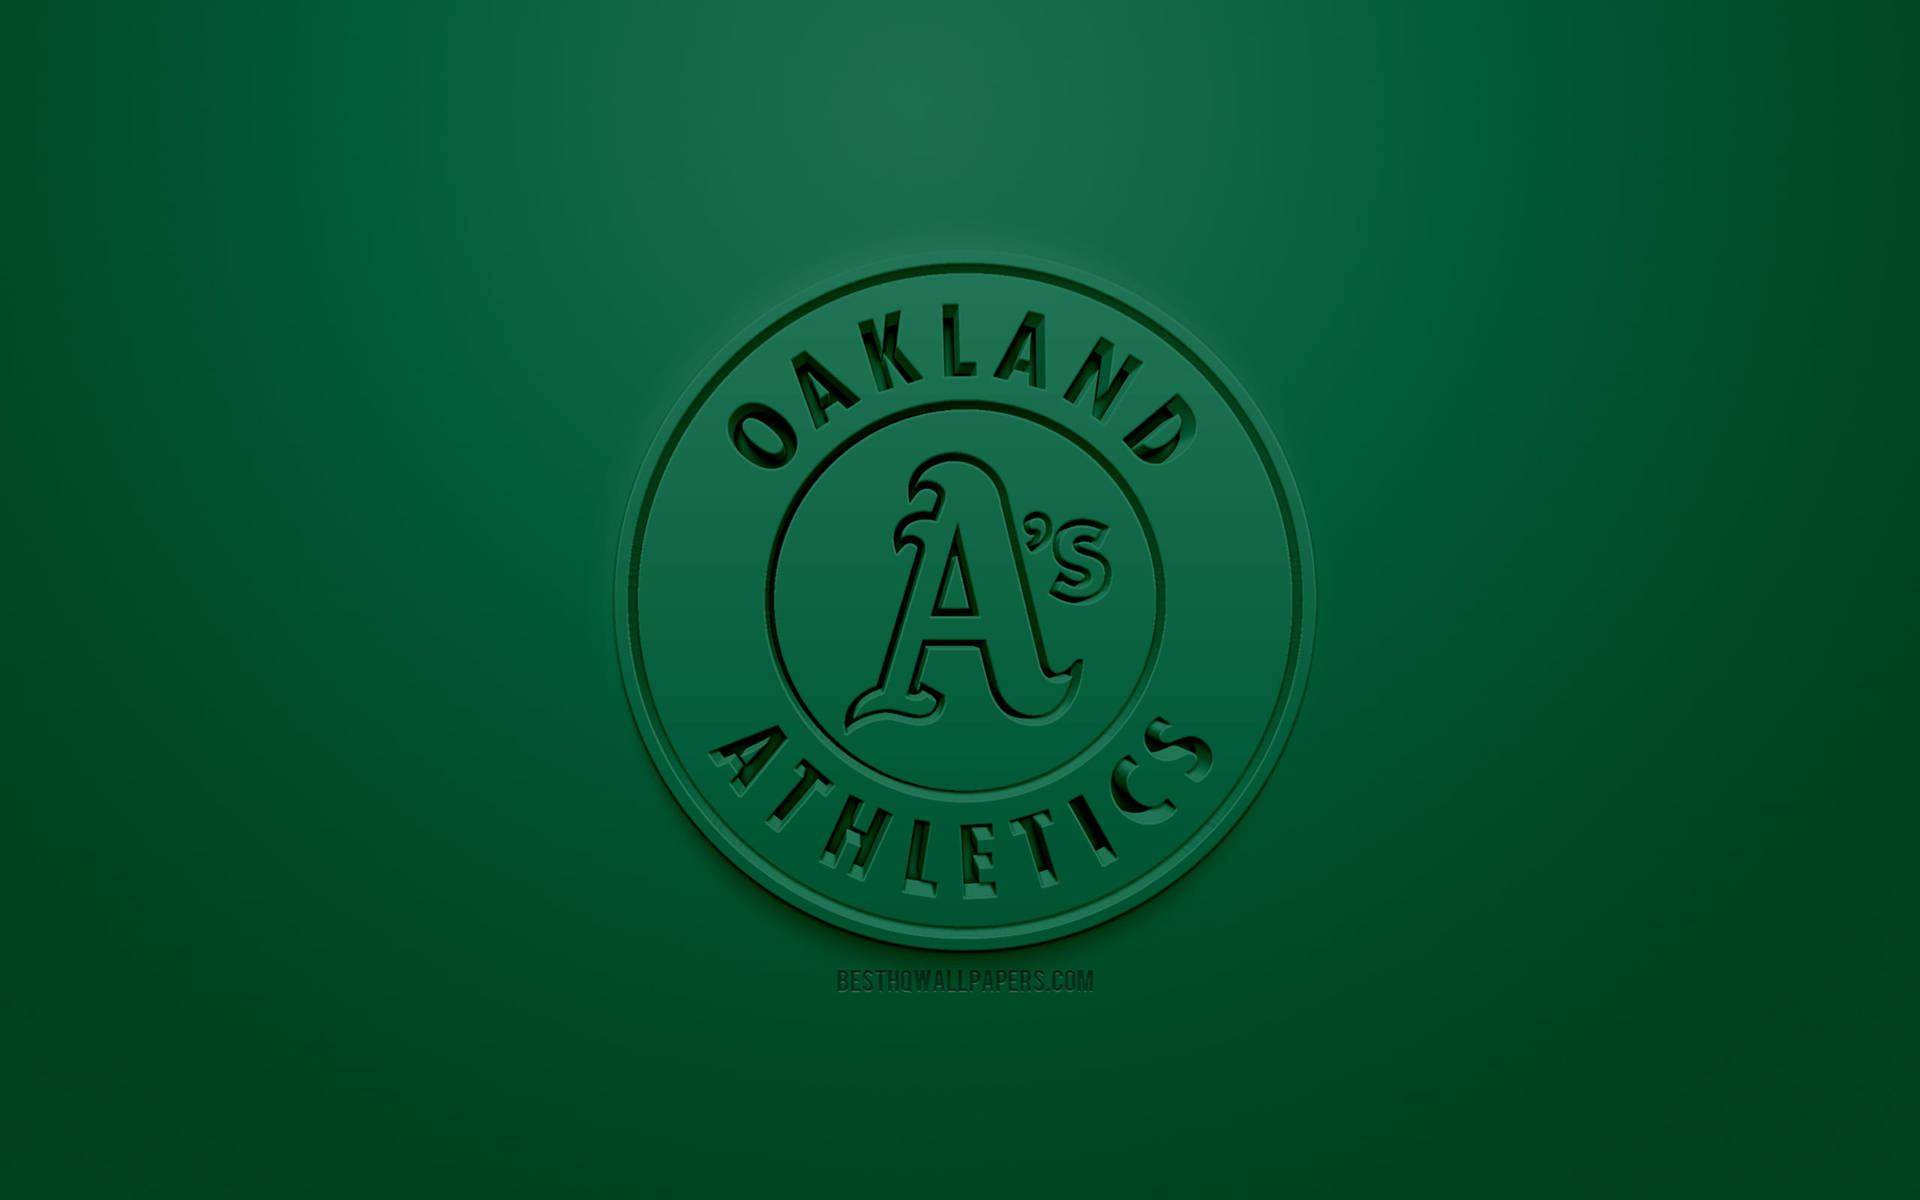 Oakland Athletics Green Monochrome